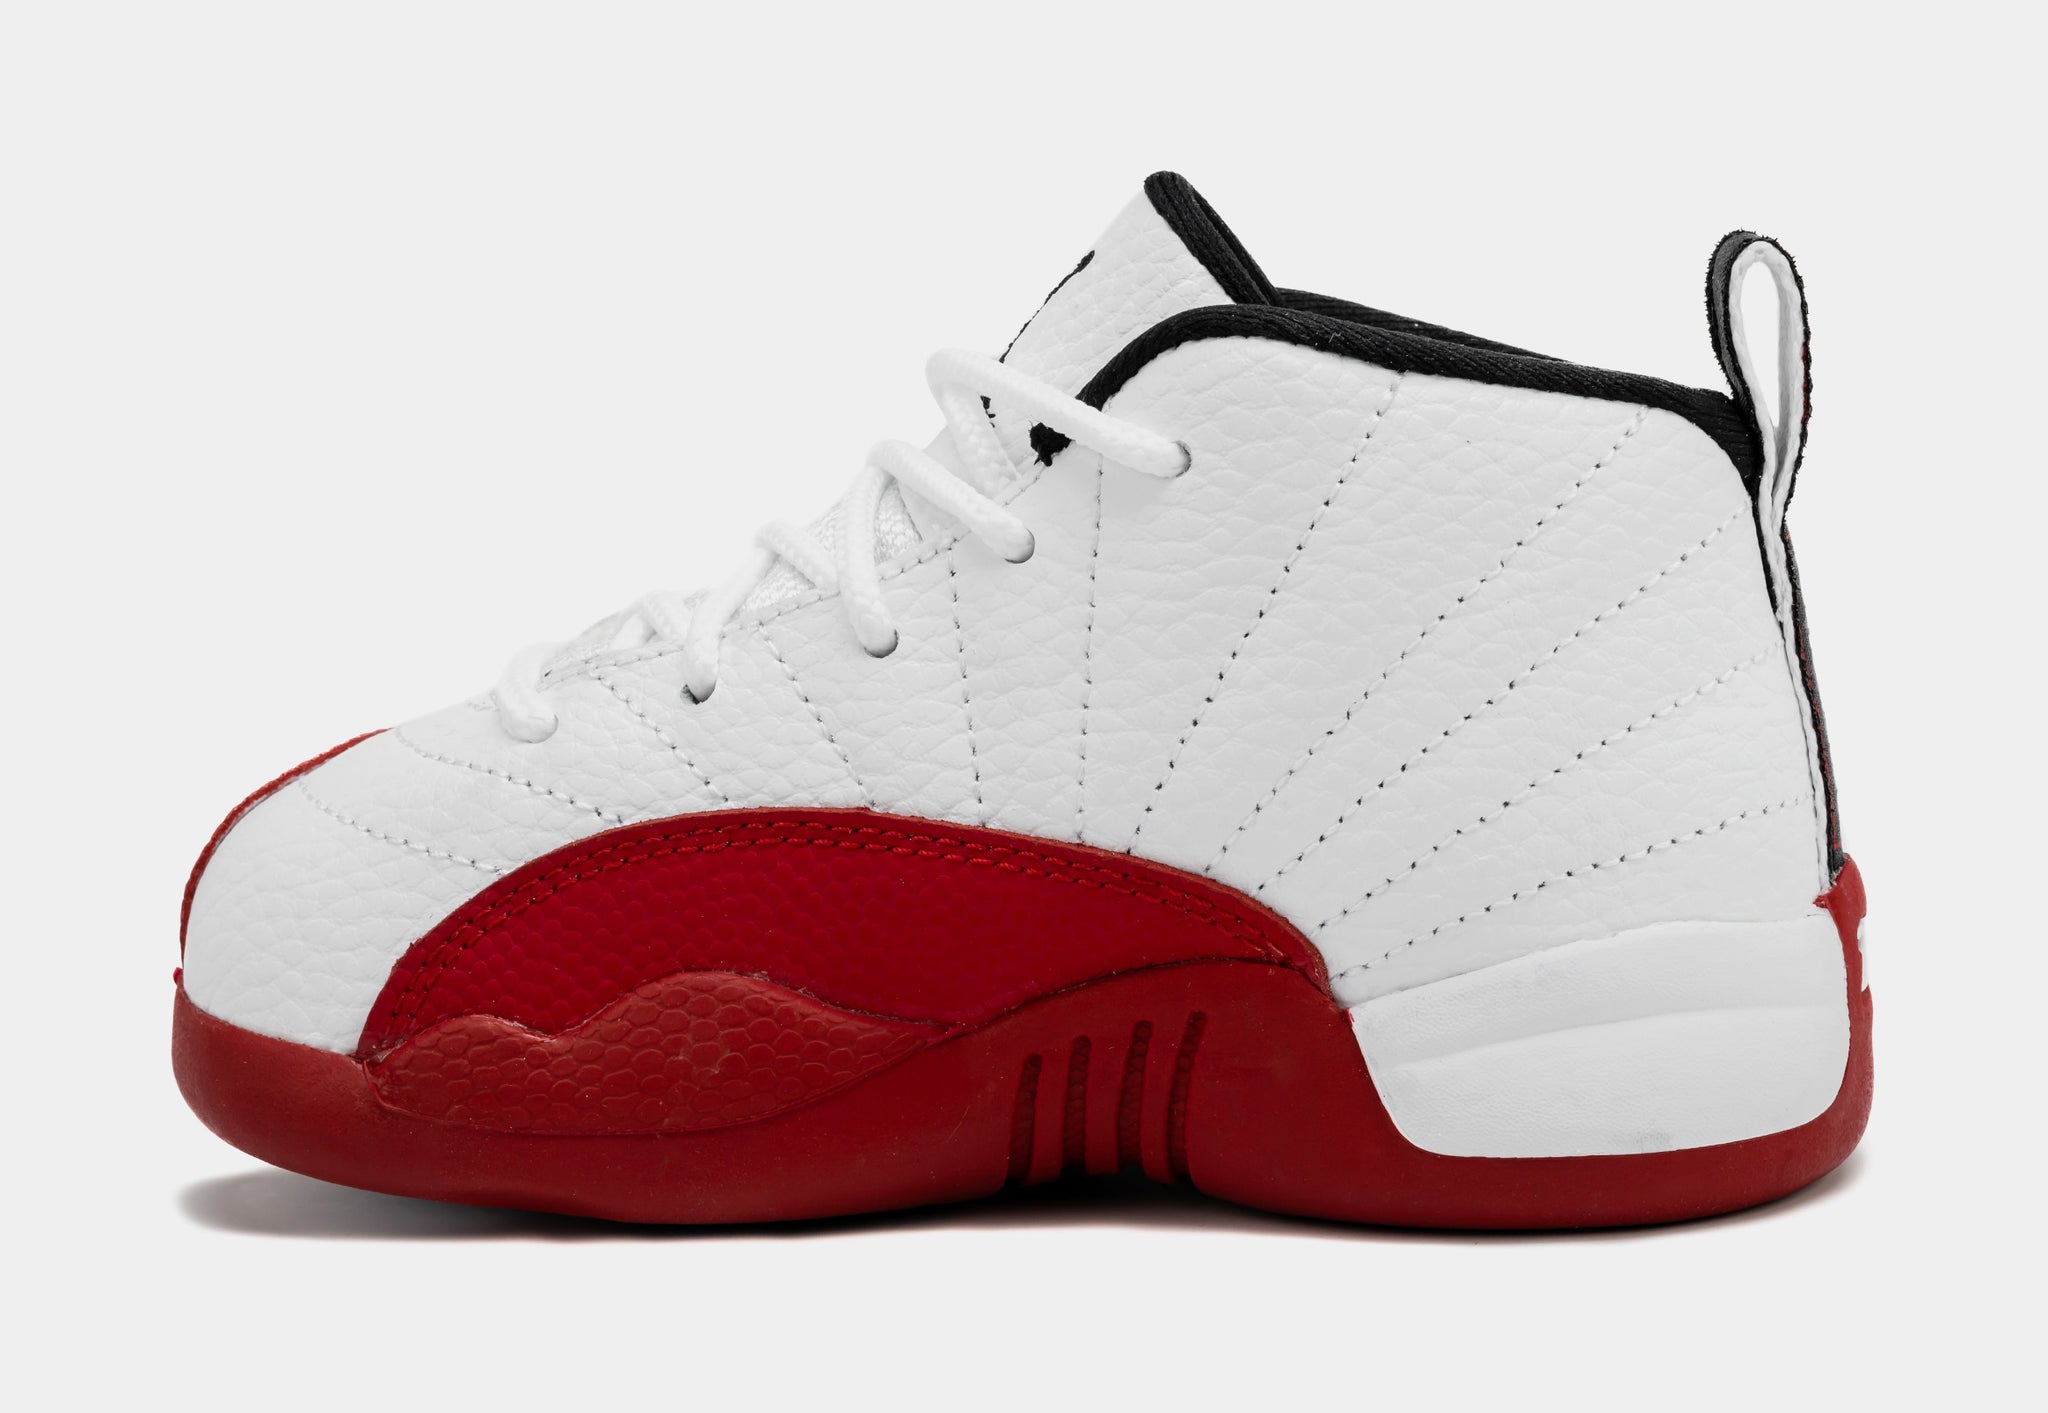 Jordan 12 Retro Black/Varsity Red/White Grade School Kids' Shoe